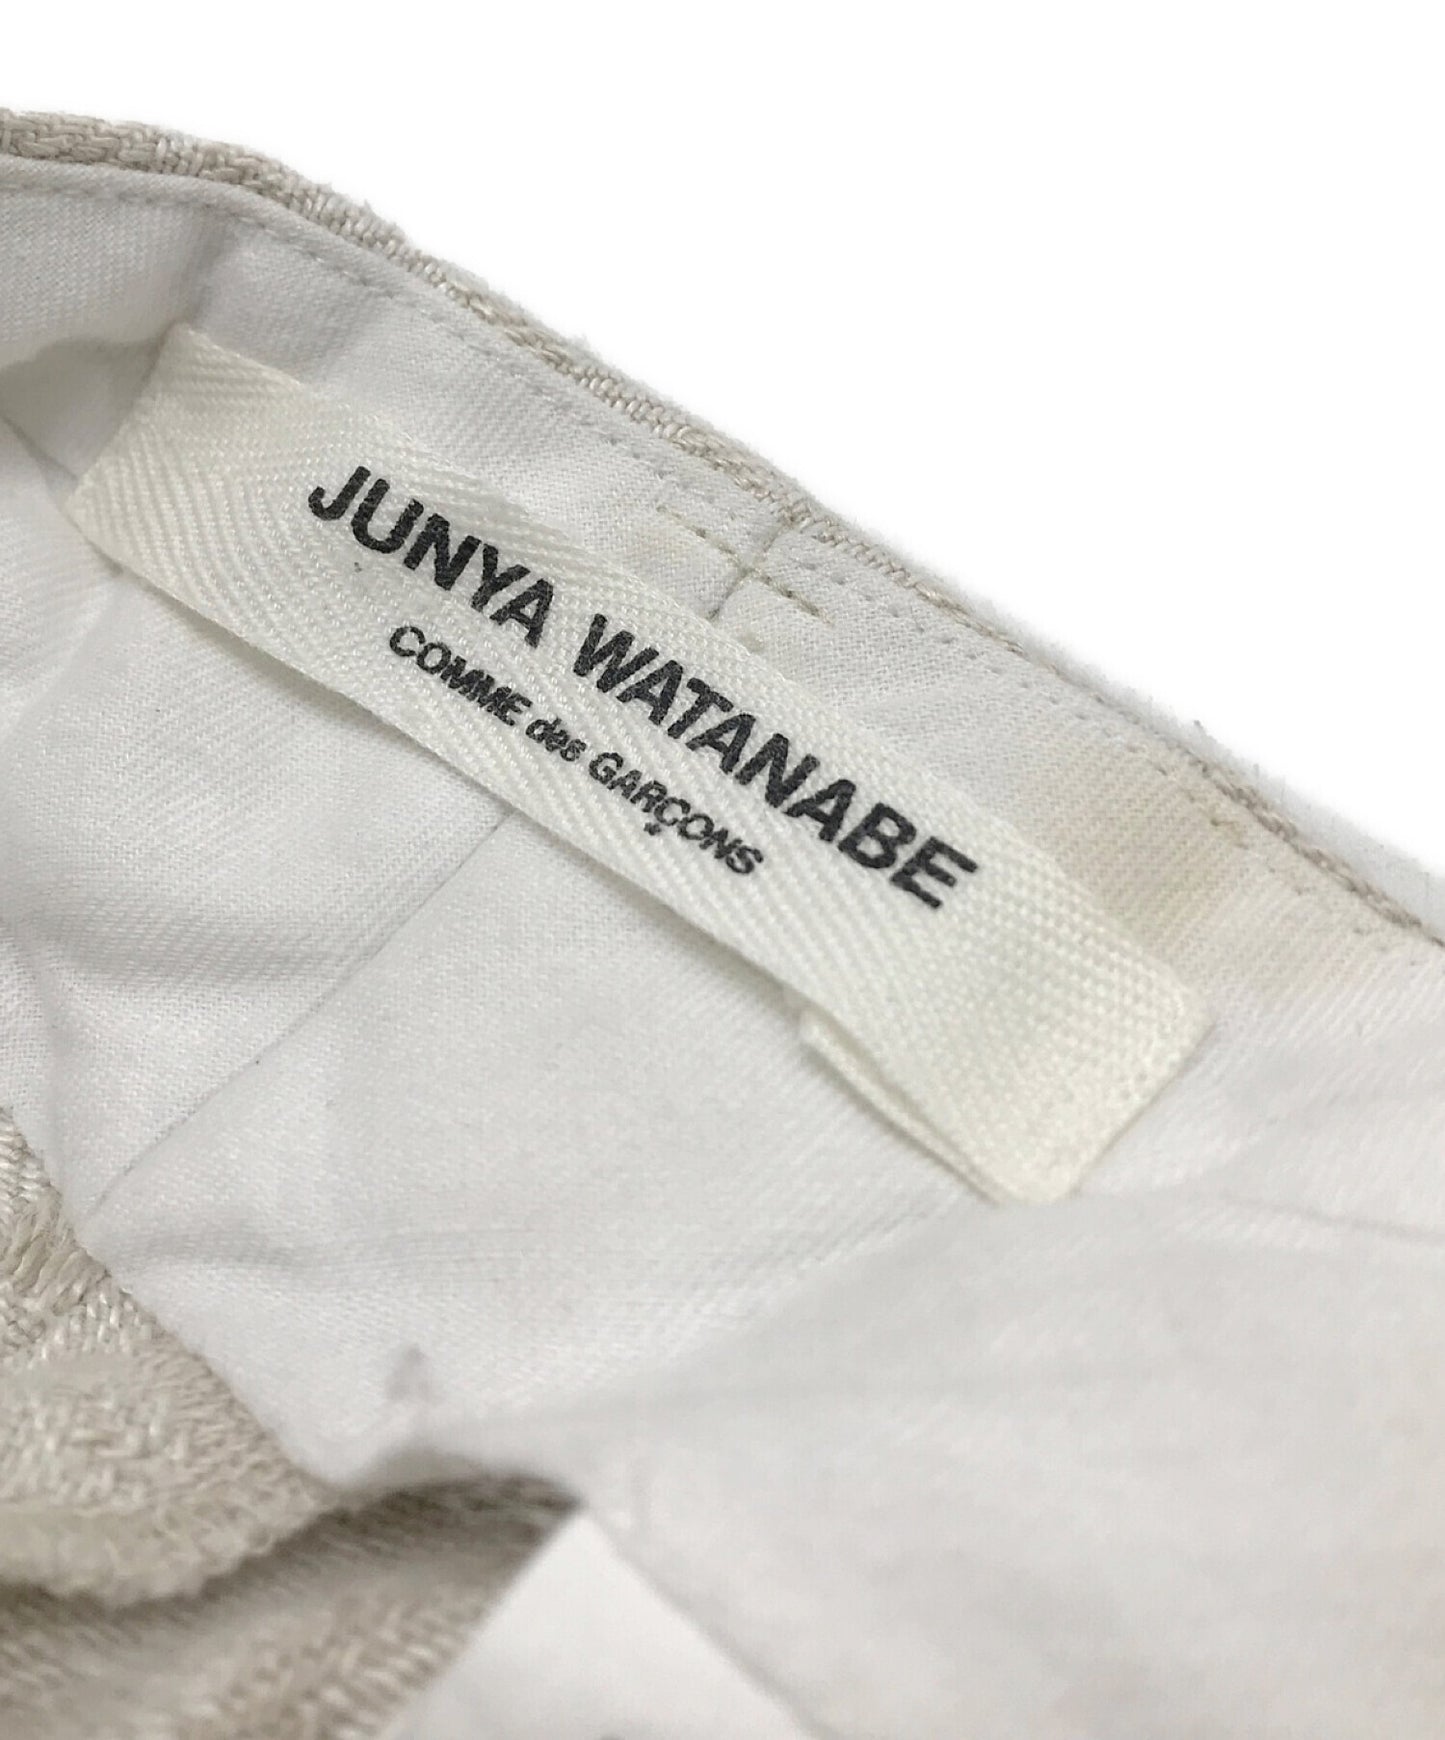 Junya Watanabe Comme des Garcons ผ้าลินินผสมกางเกง Jacquard JC-P011